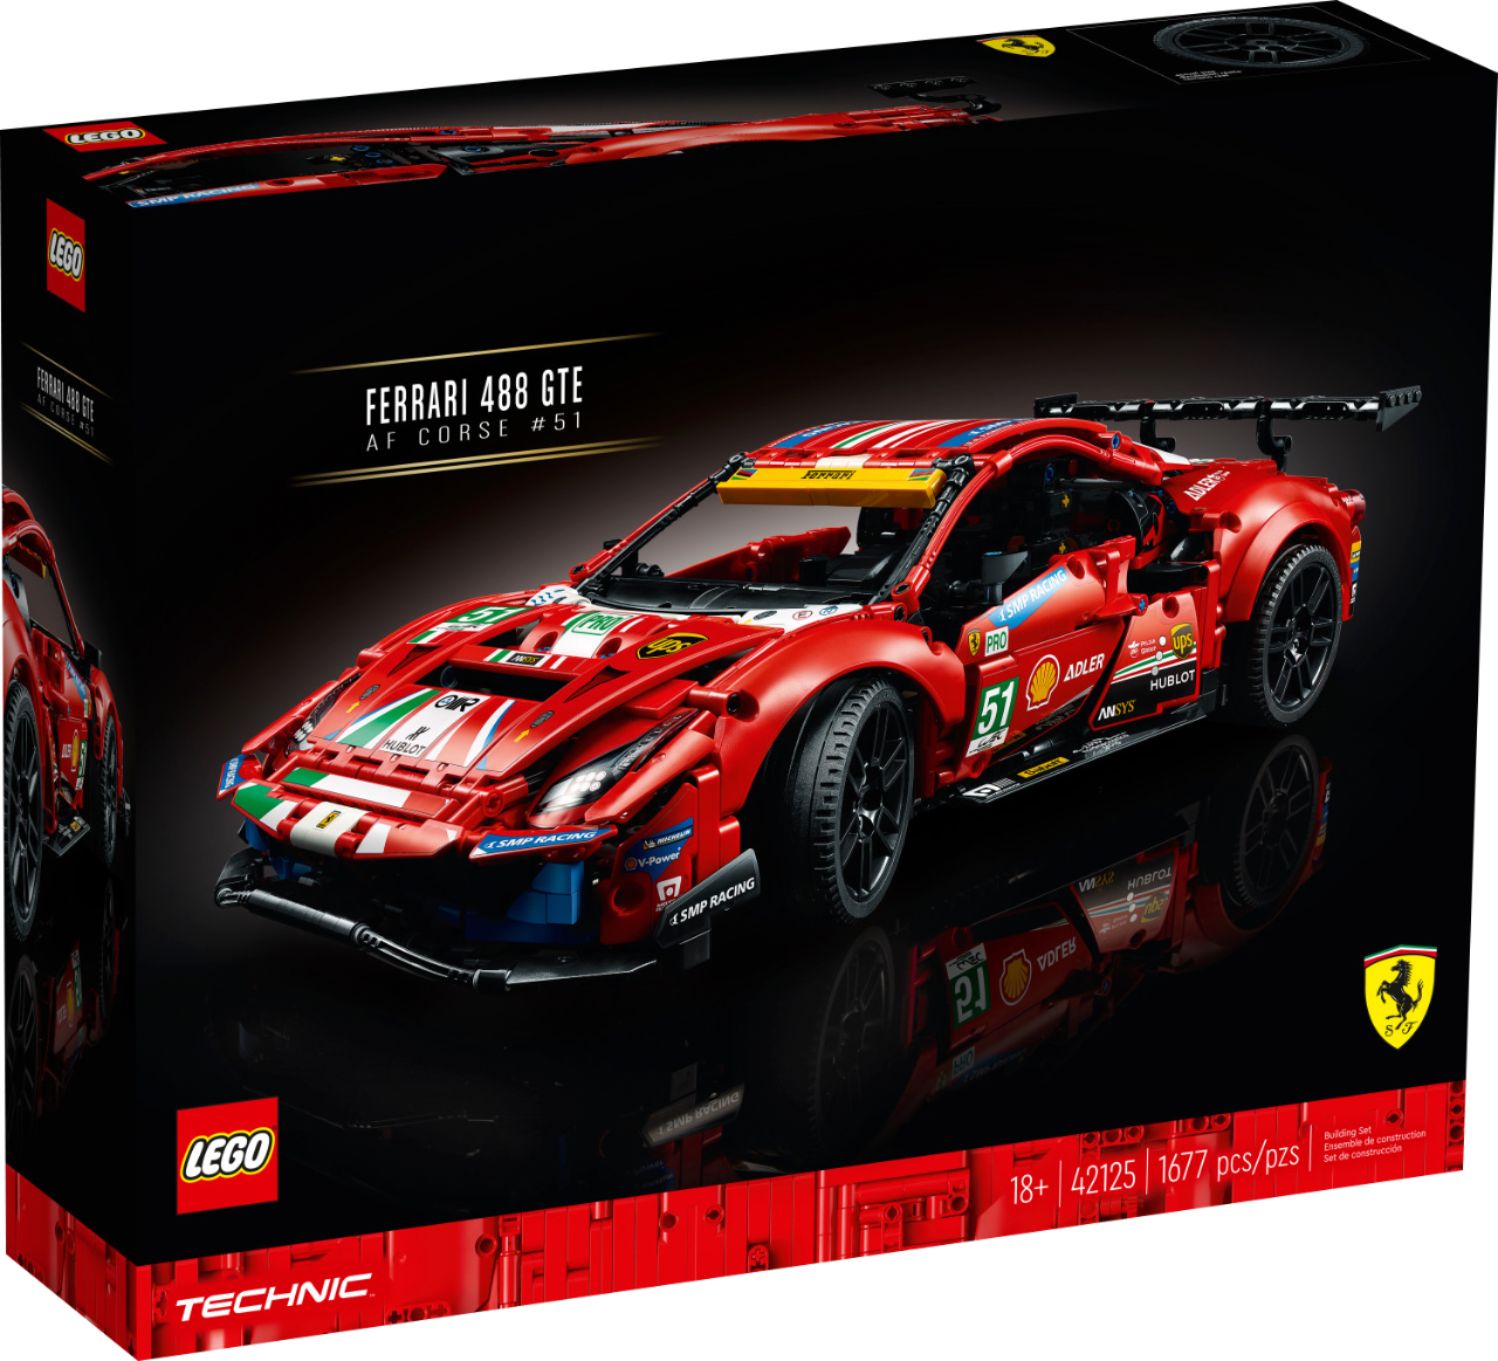 LEGO Technic Ferrari 488 GTE AF Corse 51 42125 6332760 - Best Buy